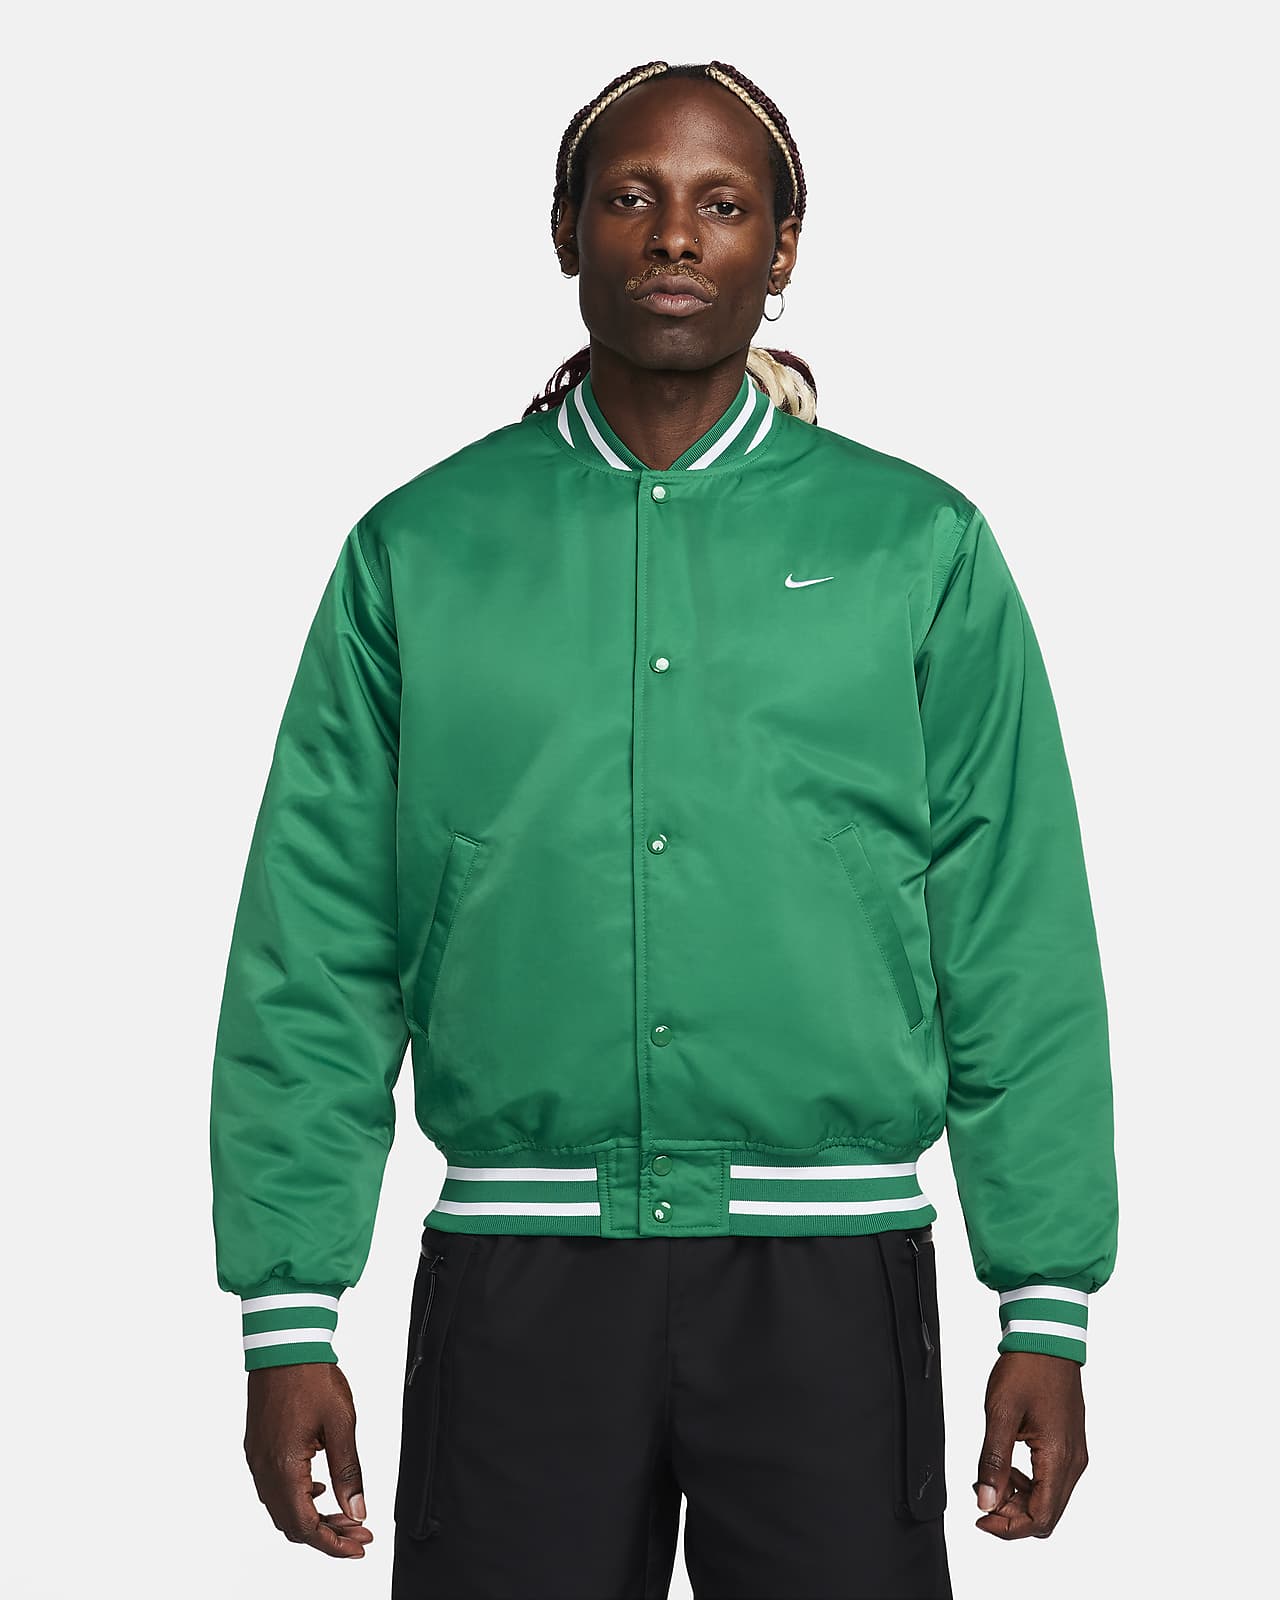 Nike Authentics kispados férfikabát